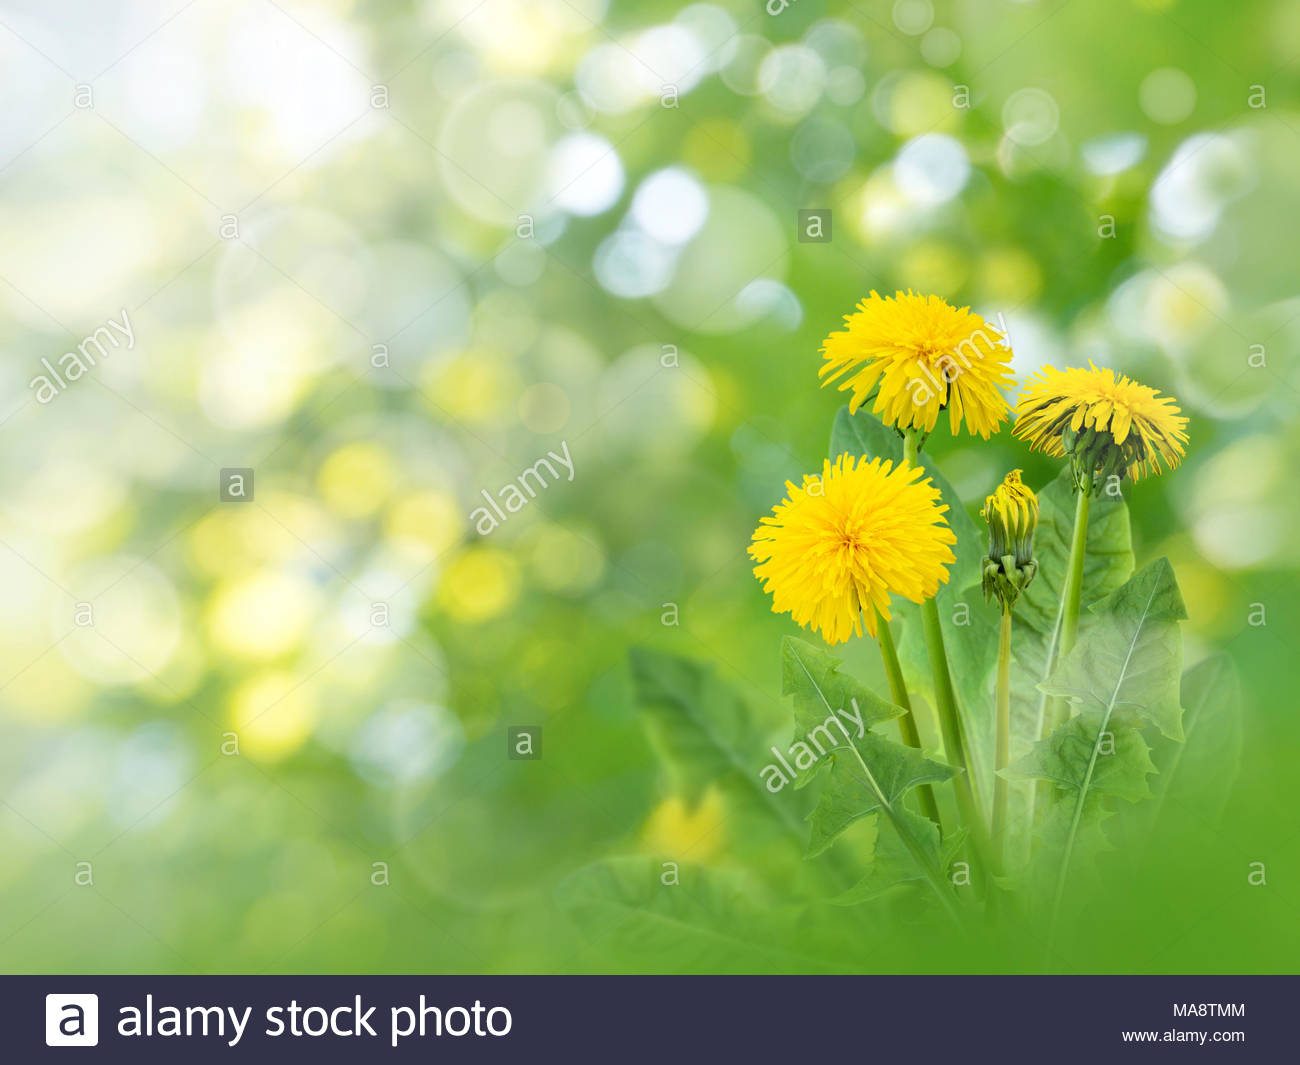 Dandelion Yellow Flowers On The Spring Blurred Garden Background